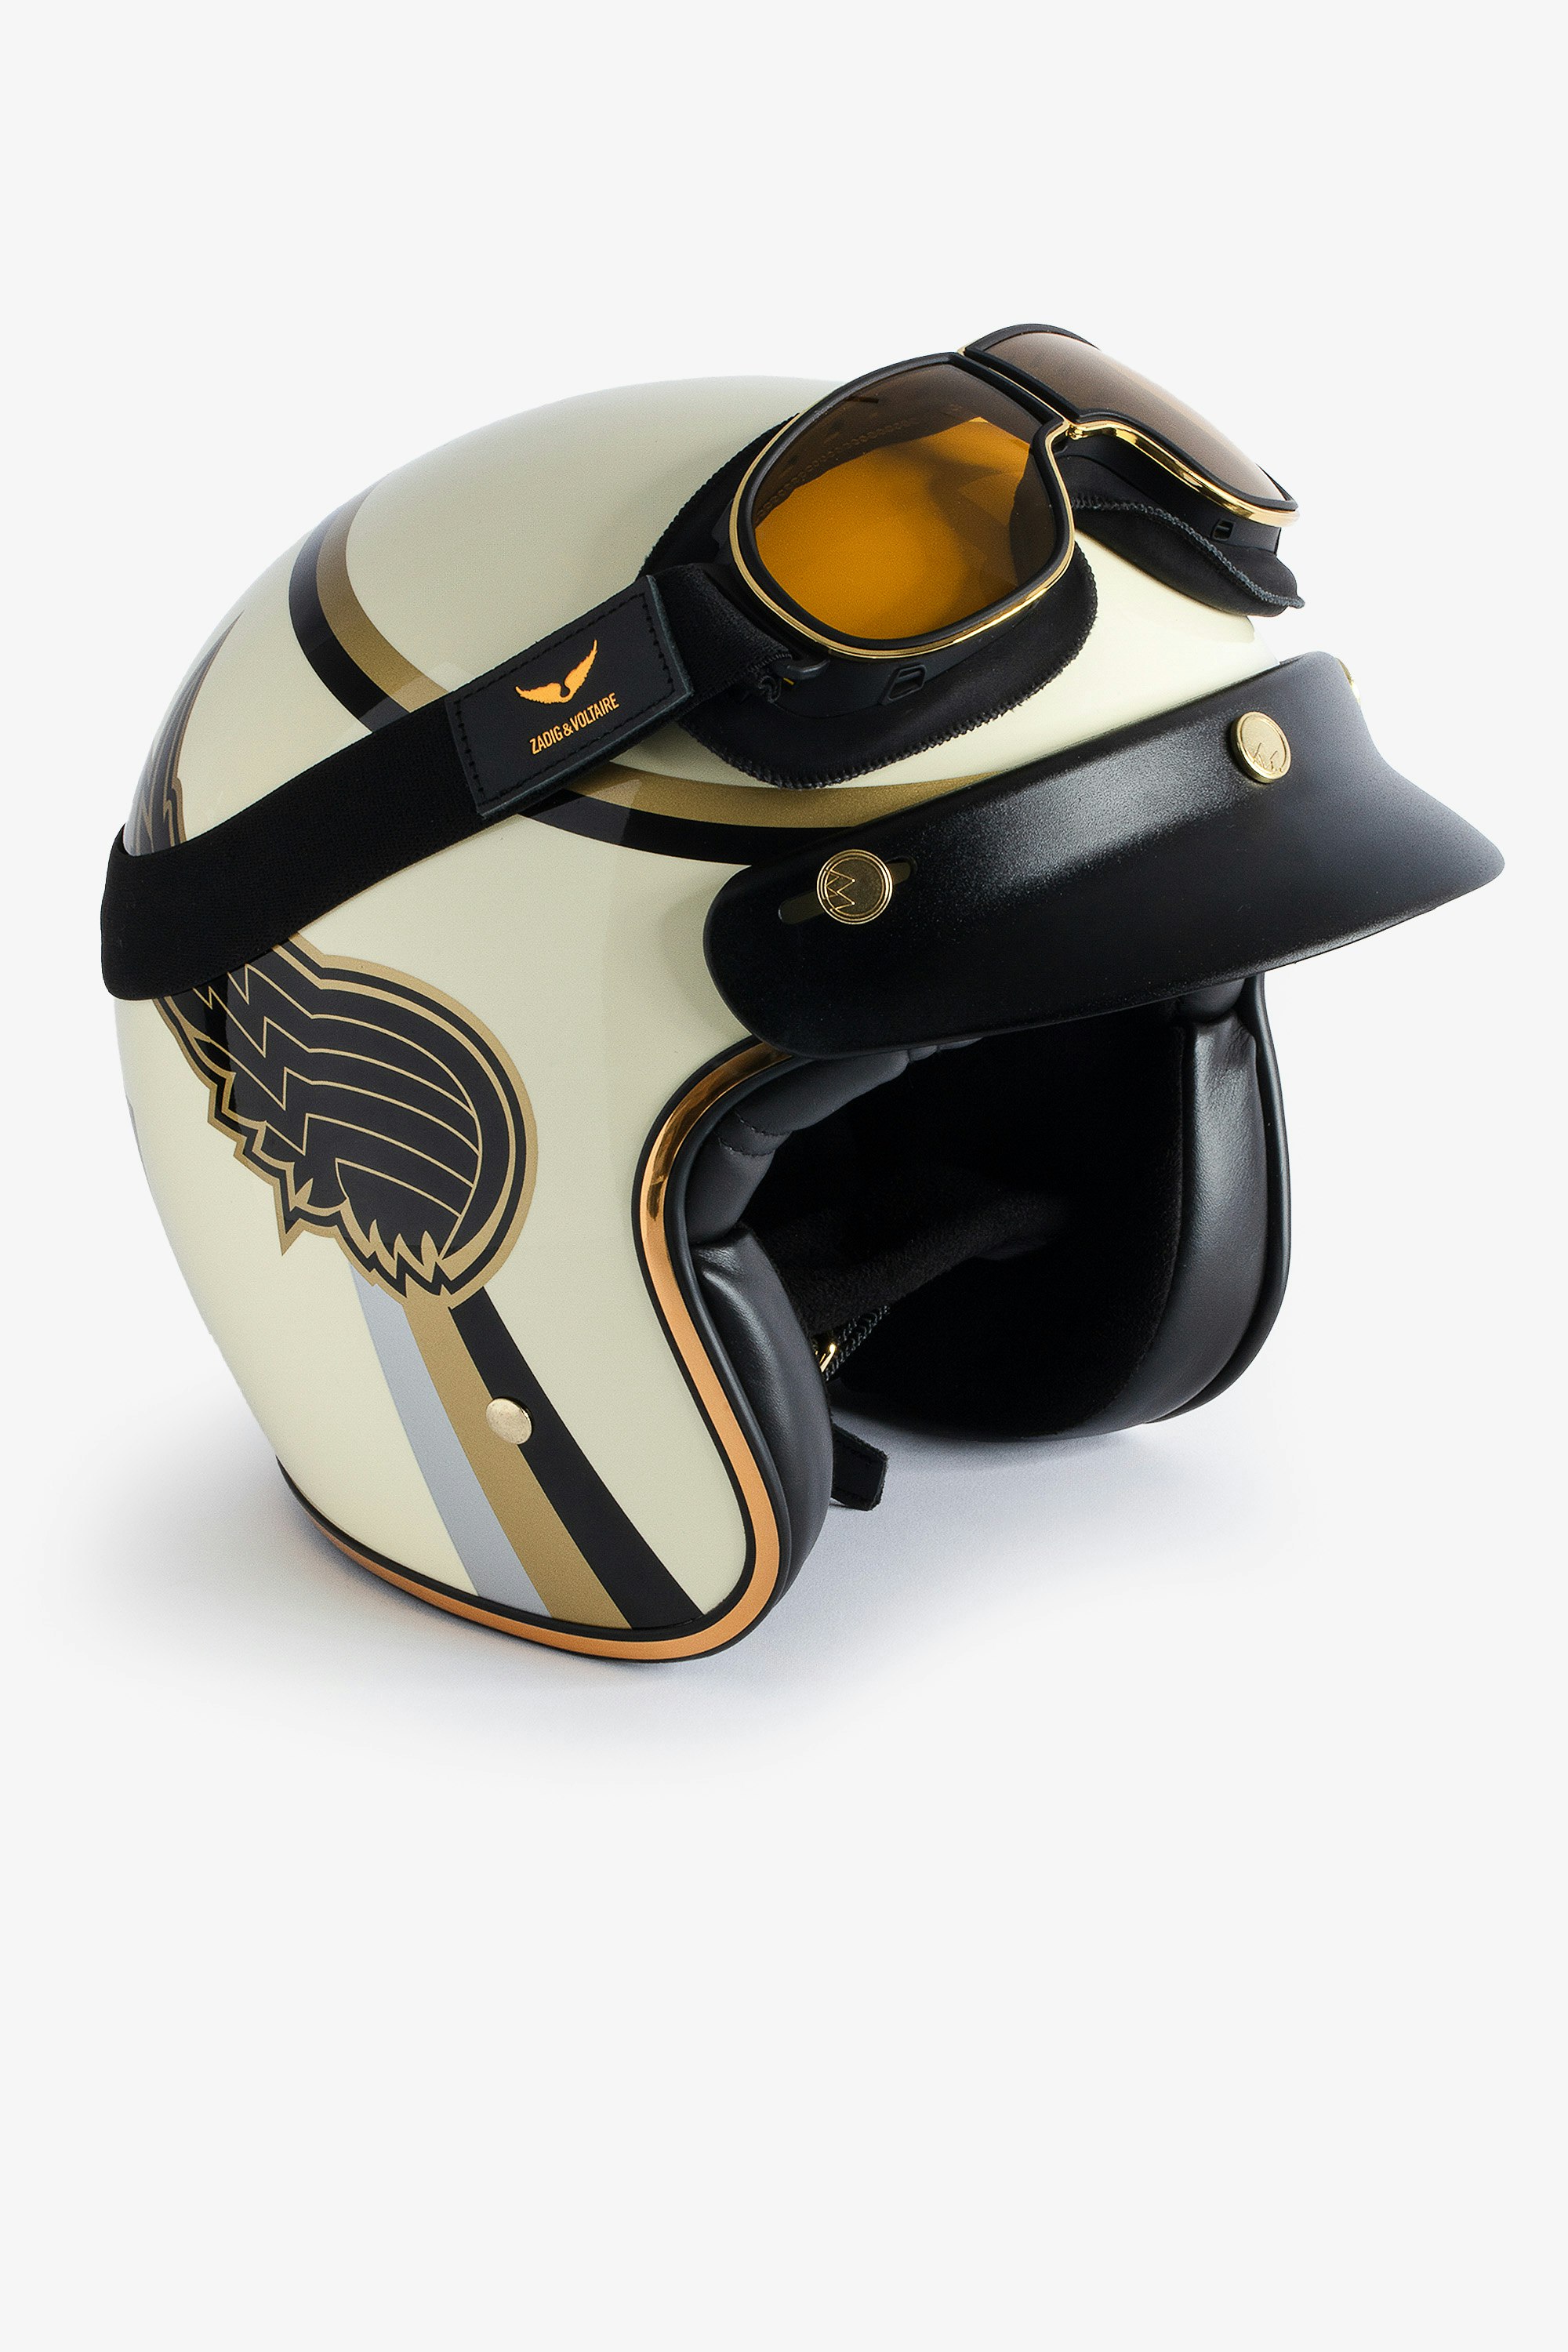 Ride your Mind Motorbike Helmet - Voltaire Vice x Mârkö Helmets ecru motorbike helmet with removable goggles.